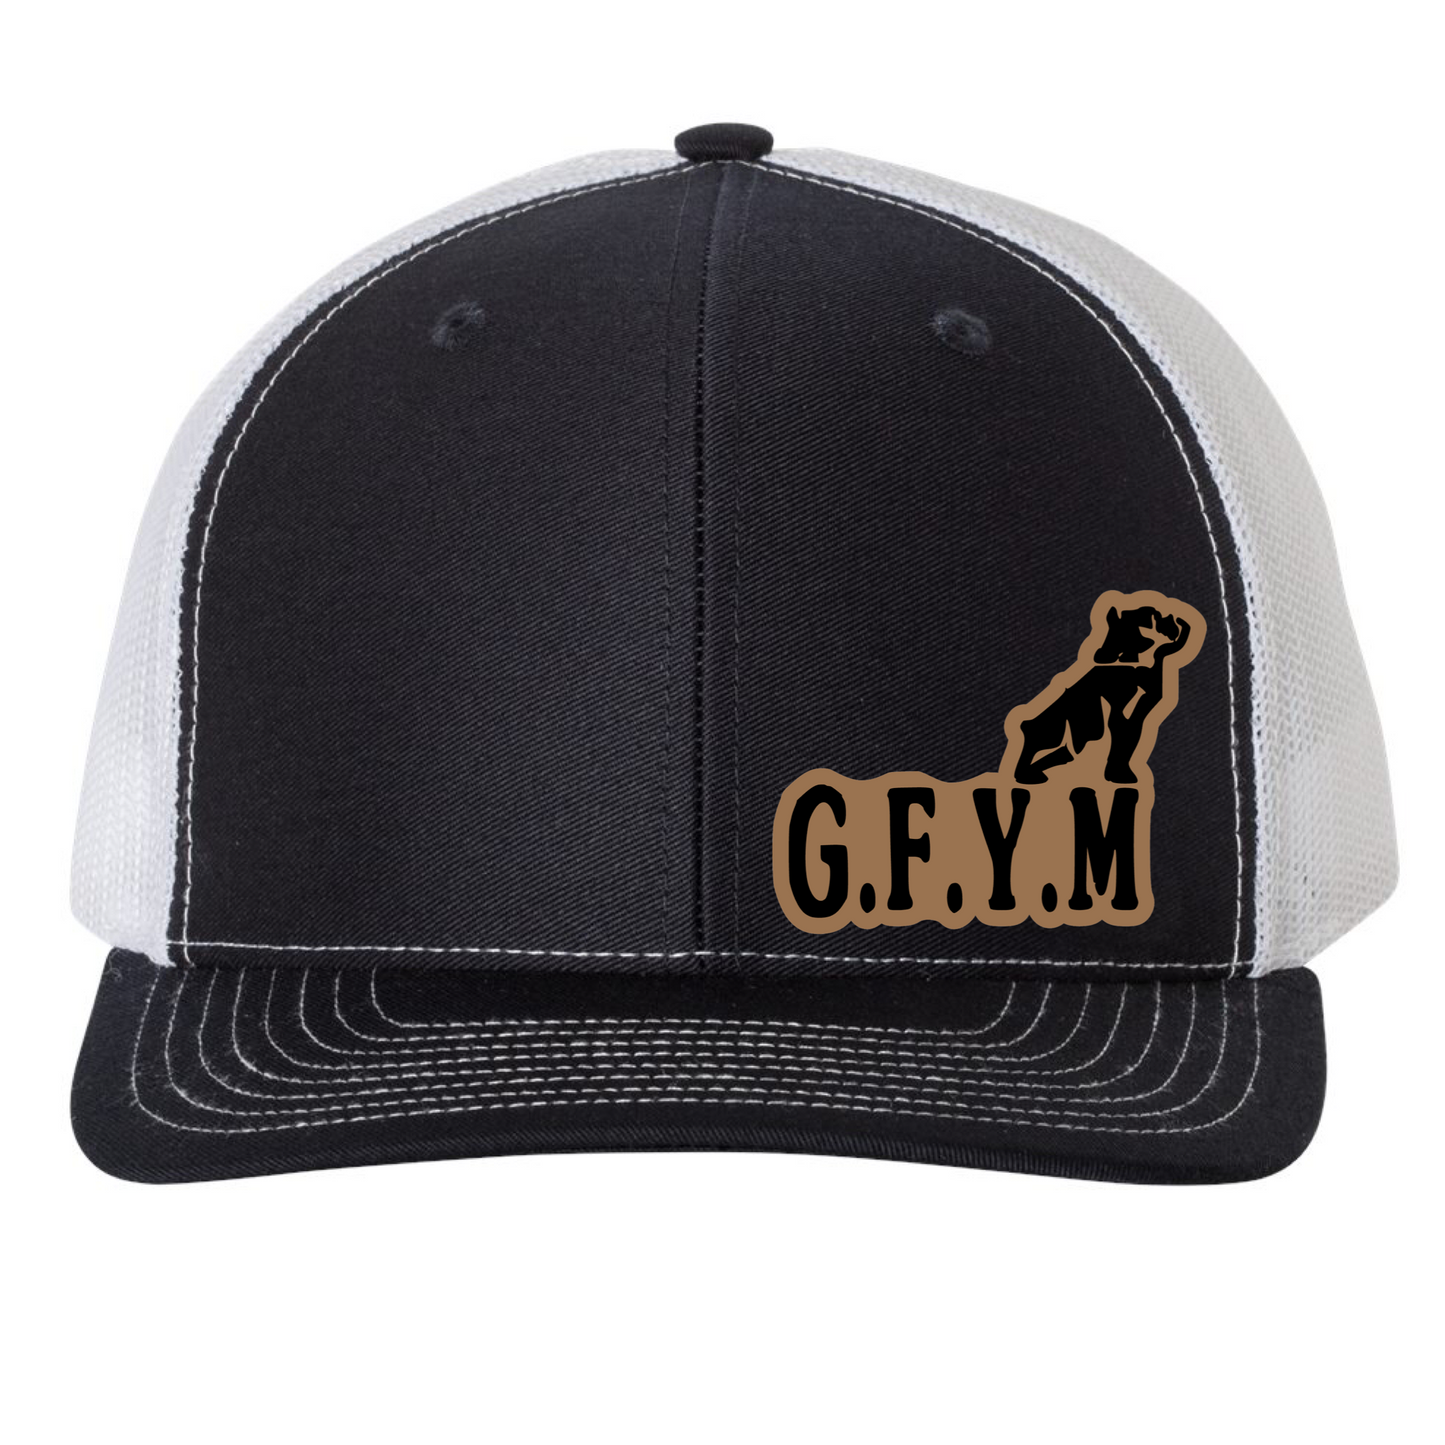 BIG DAD Size G.F.Y.M Mack Richardson 112 Trucker Hat and Sticker